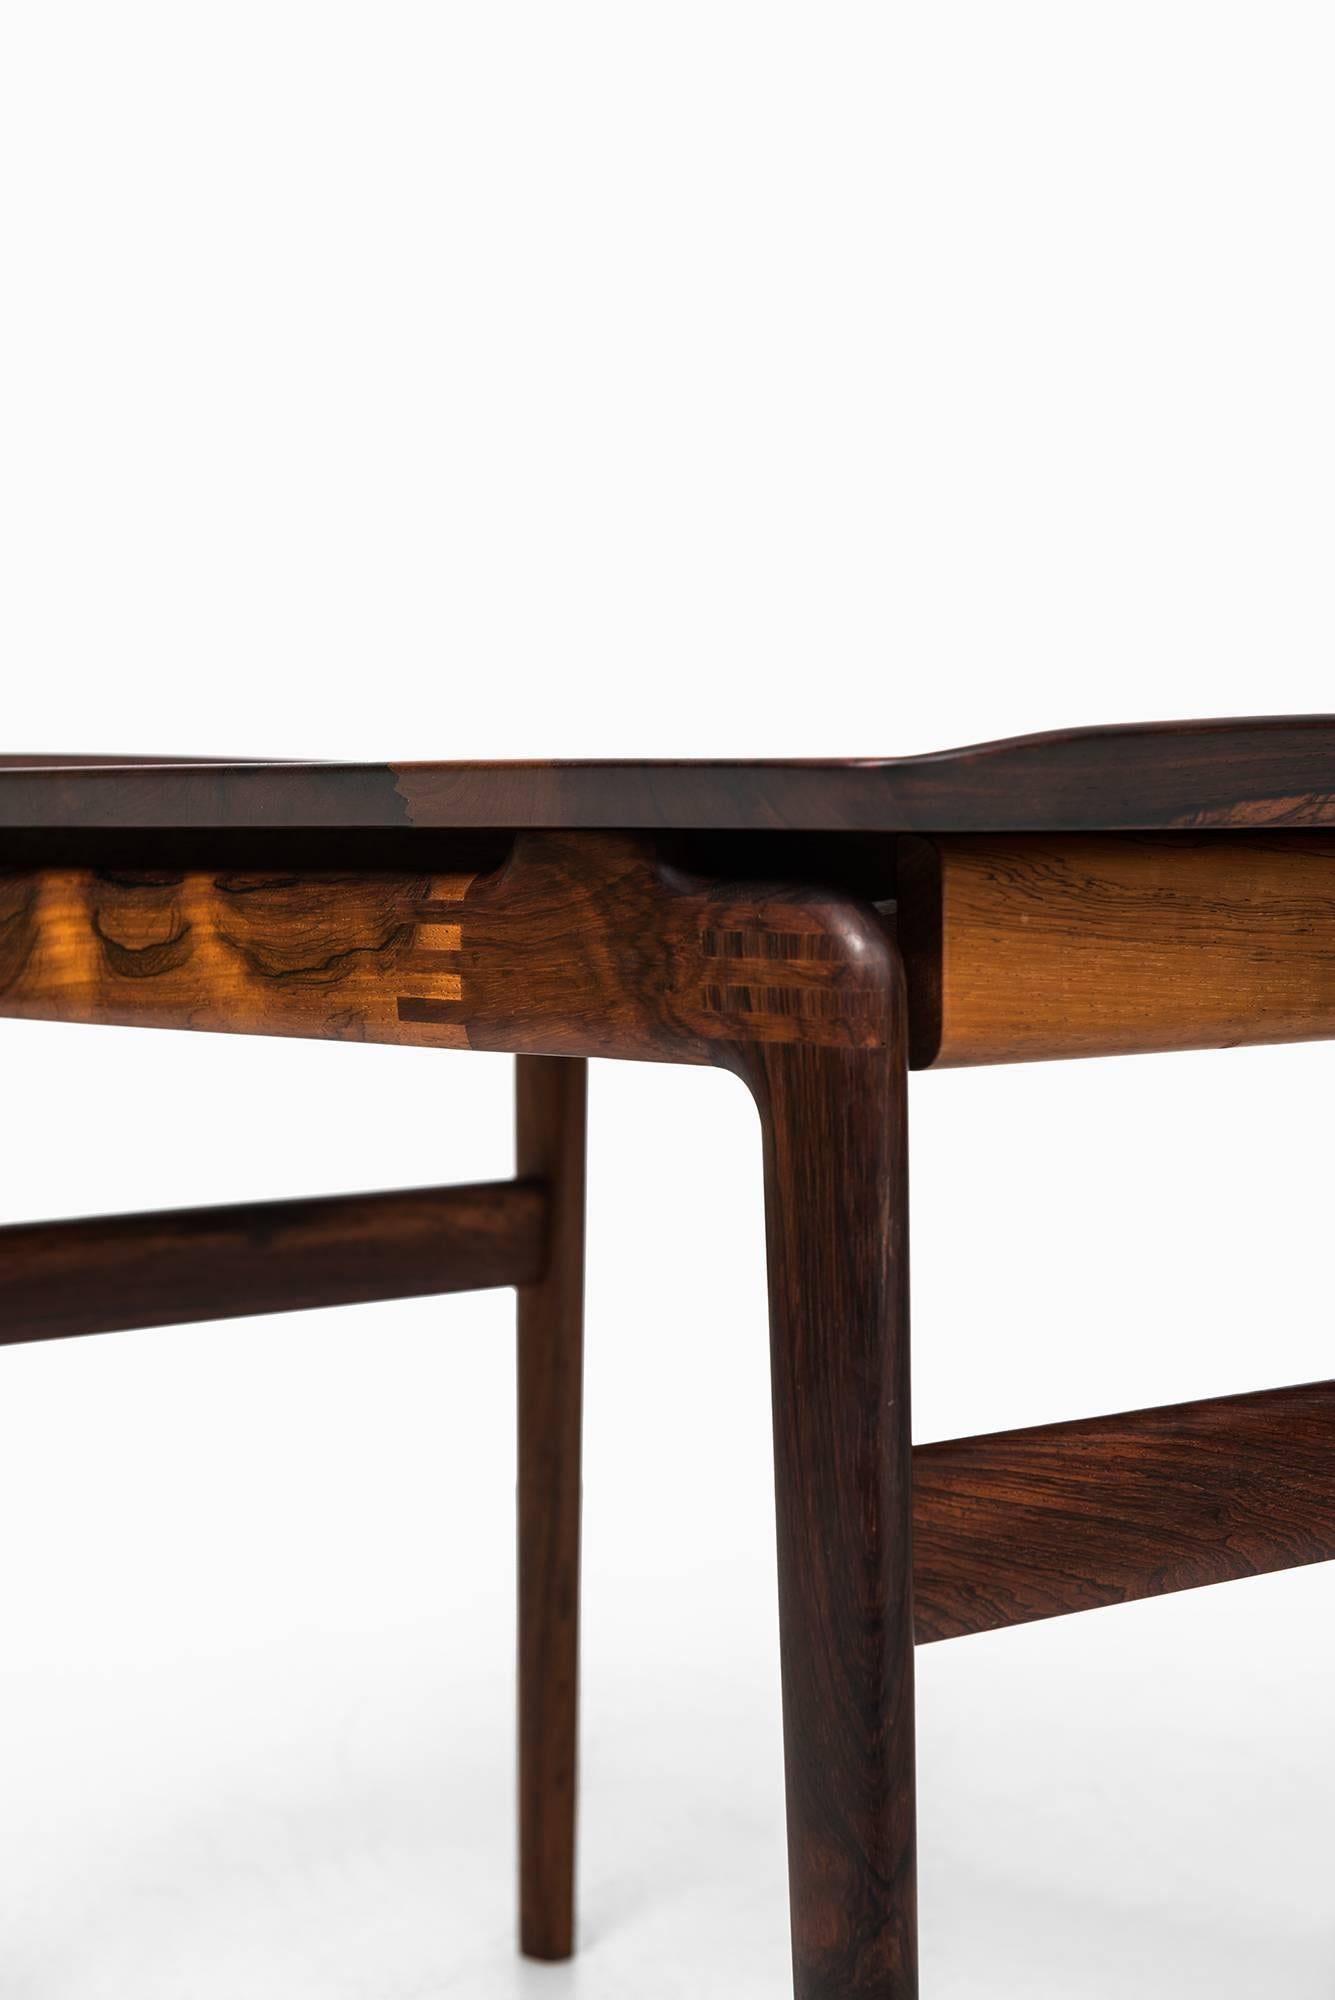 Rare pair of side or bedside tables designed by Peter Hvidt & Orla Mølgaard-Nielsen. Produced by France & Son in Denmark.